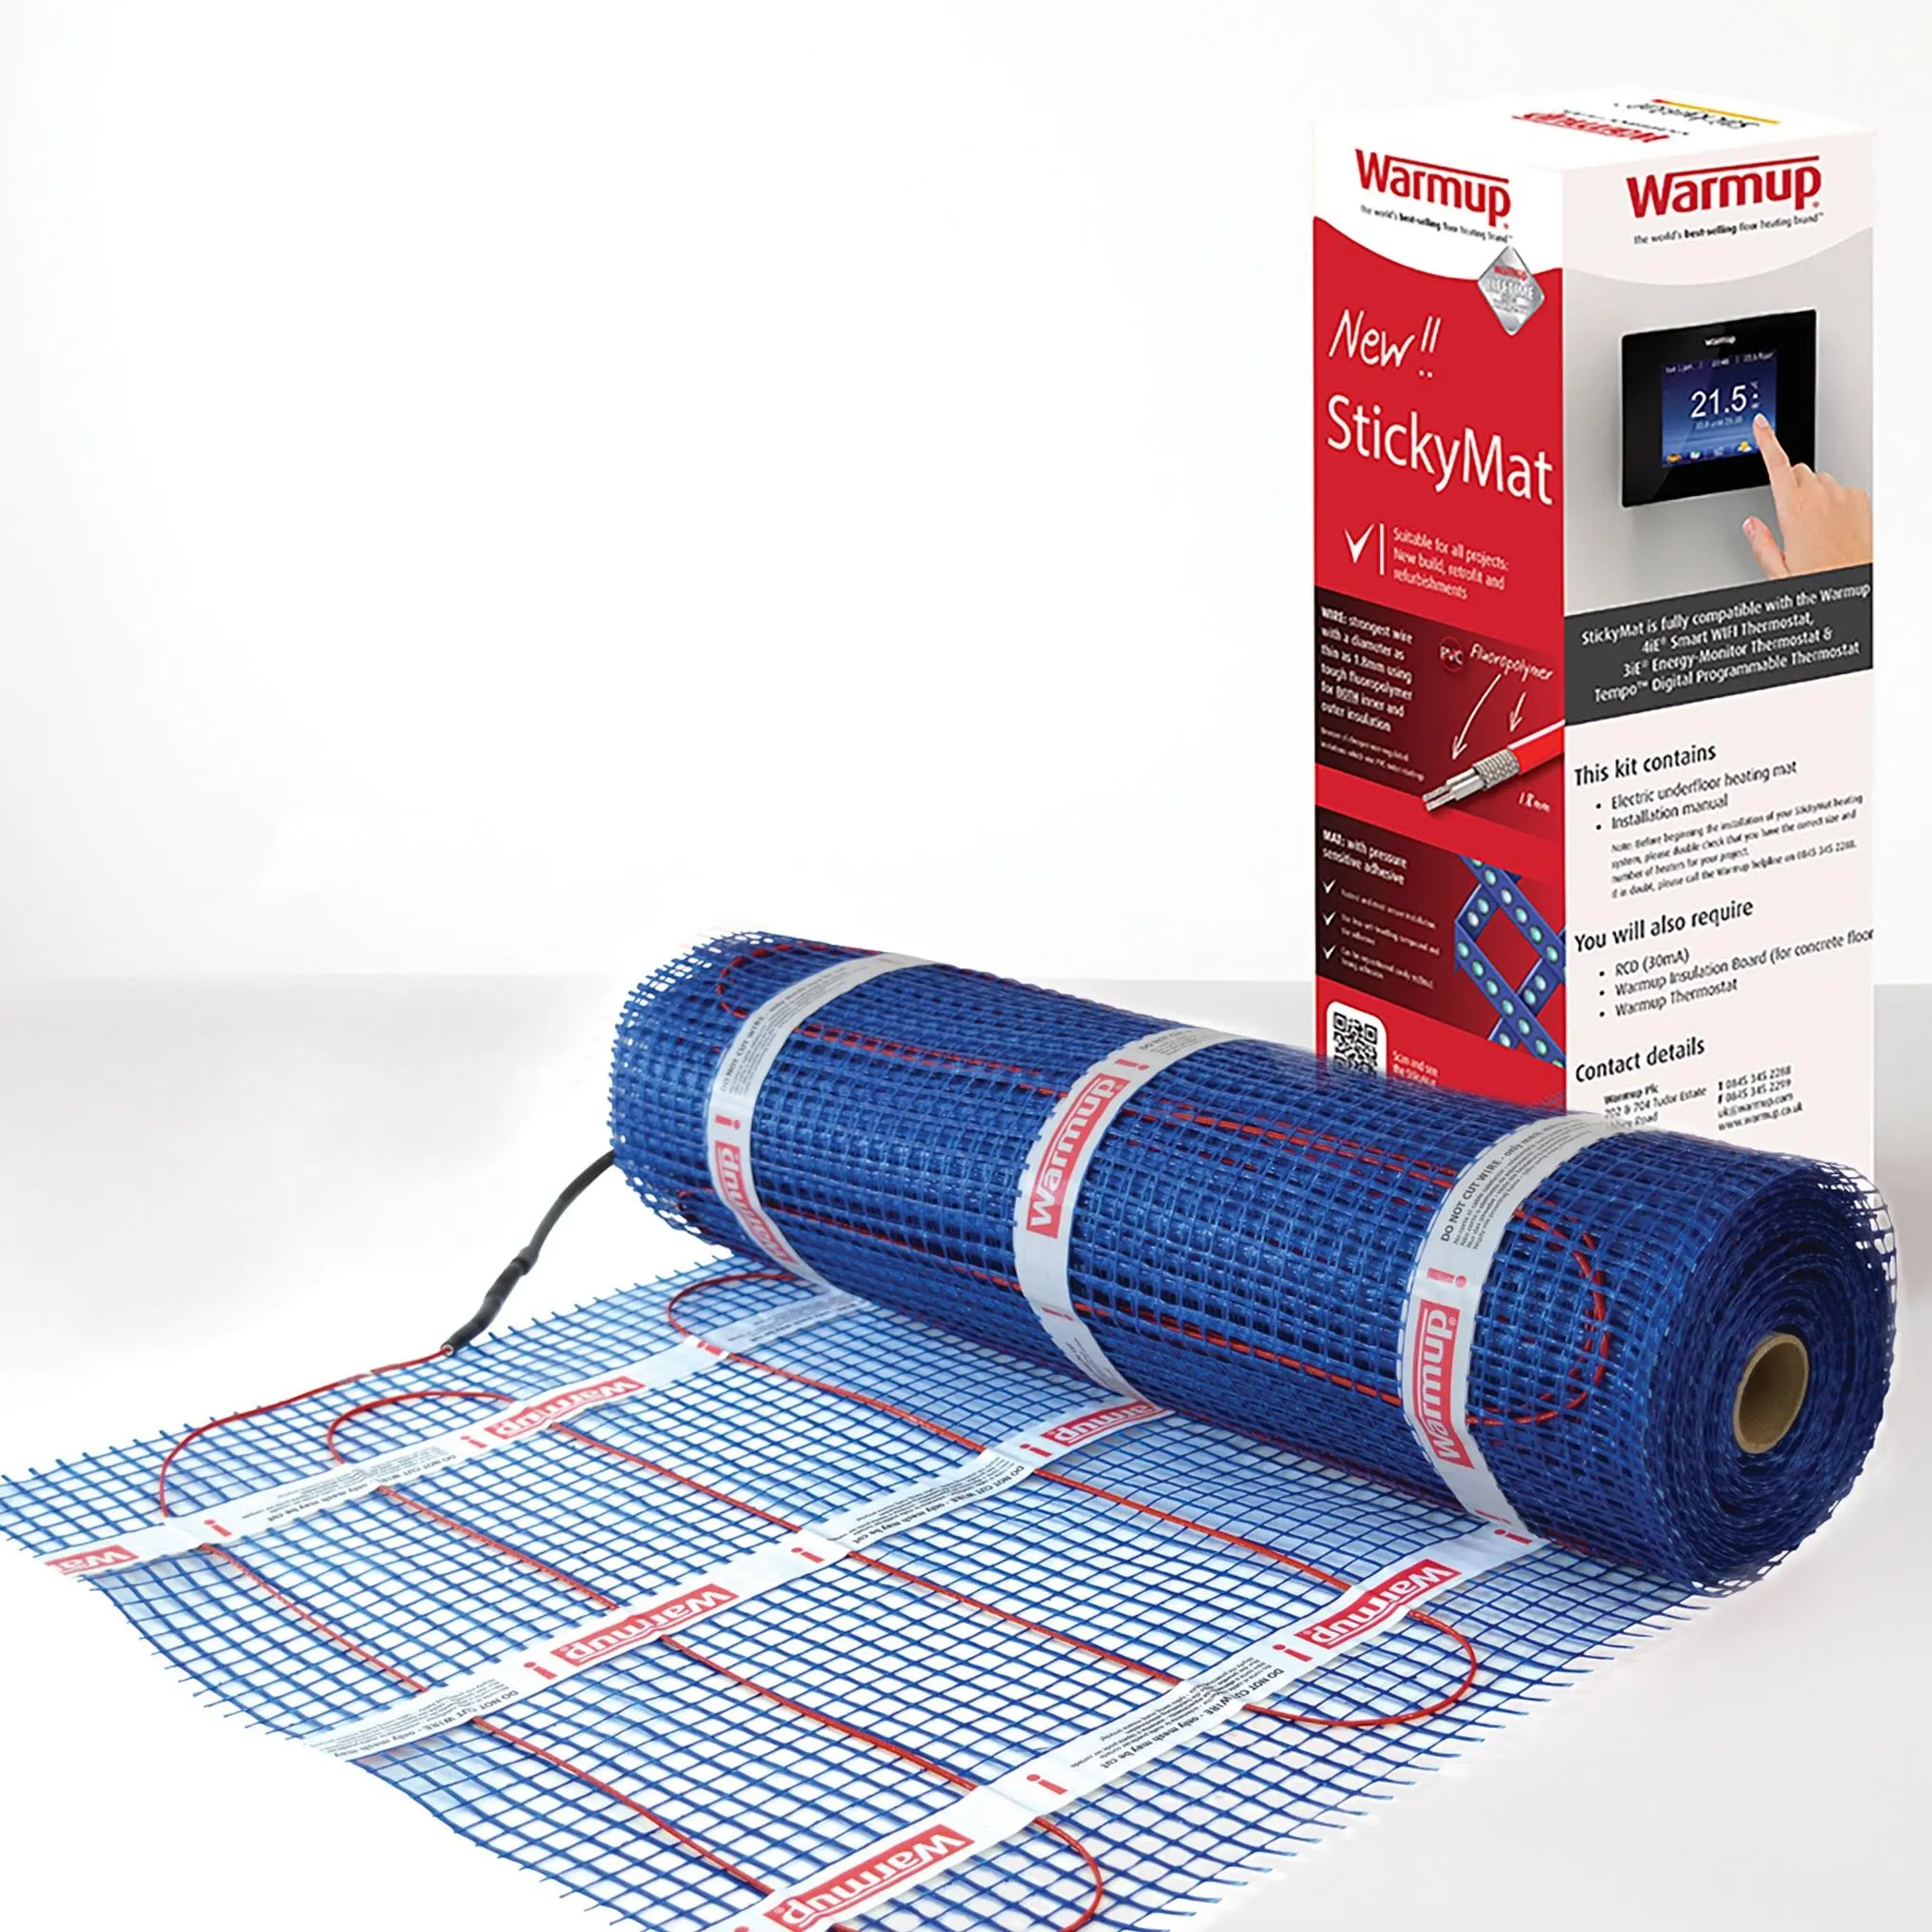 Warmup StickyMat Underfloor Heating System 200W/m² - 4m²